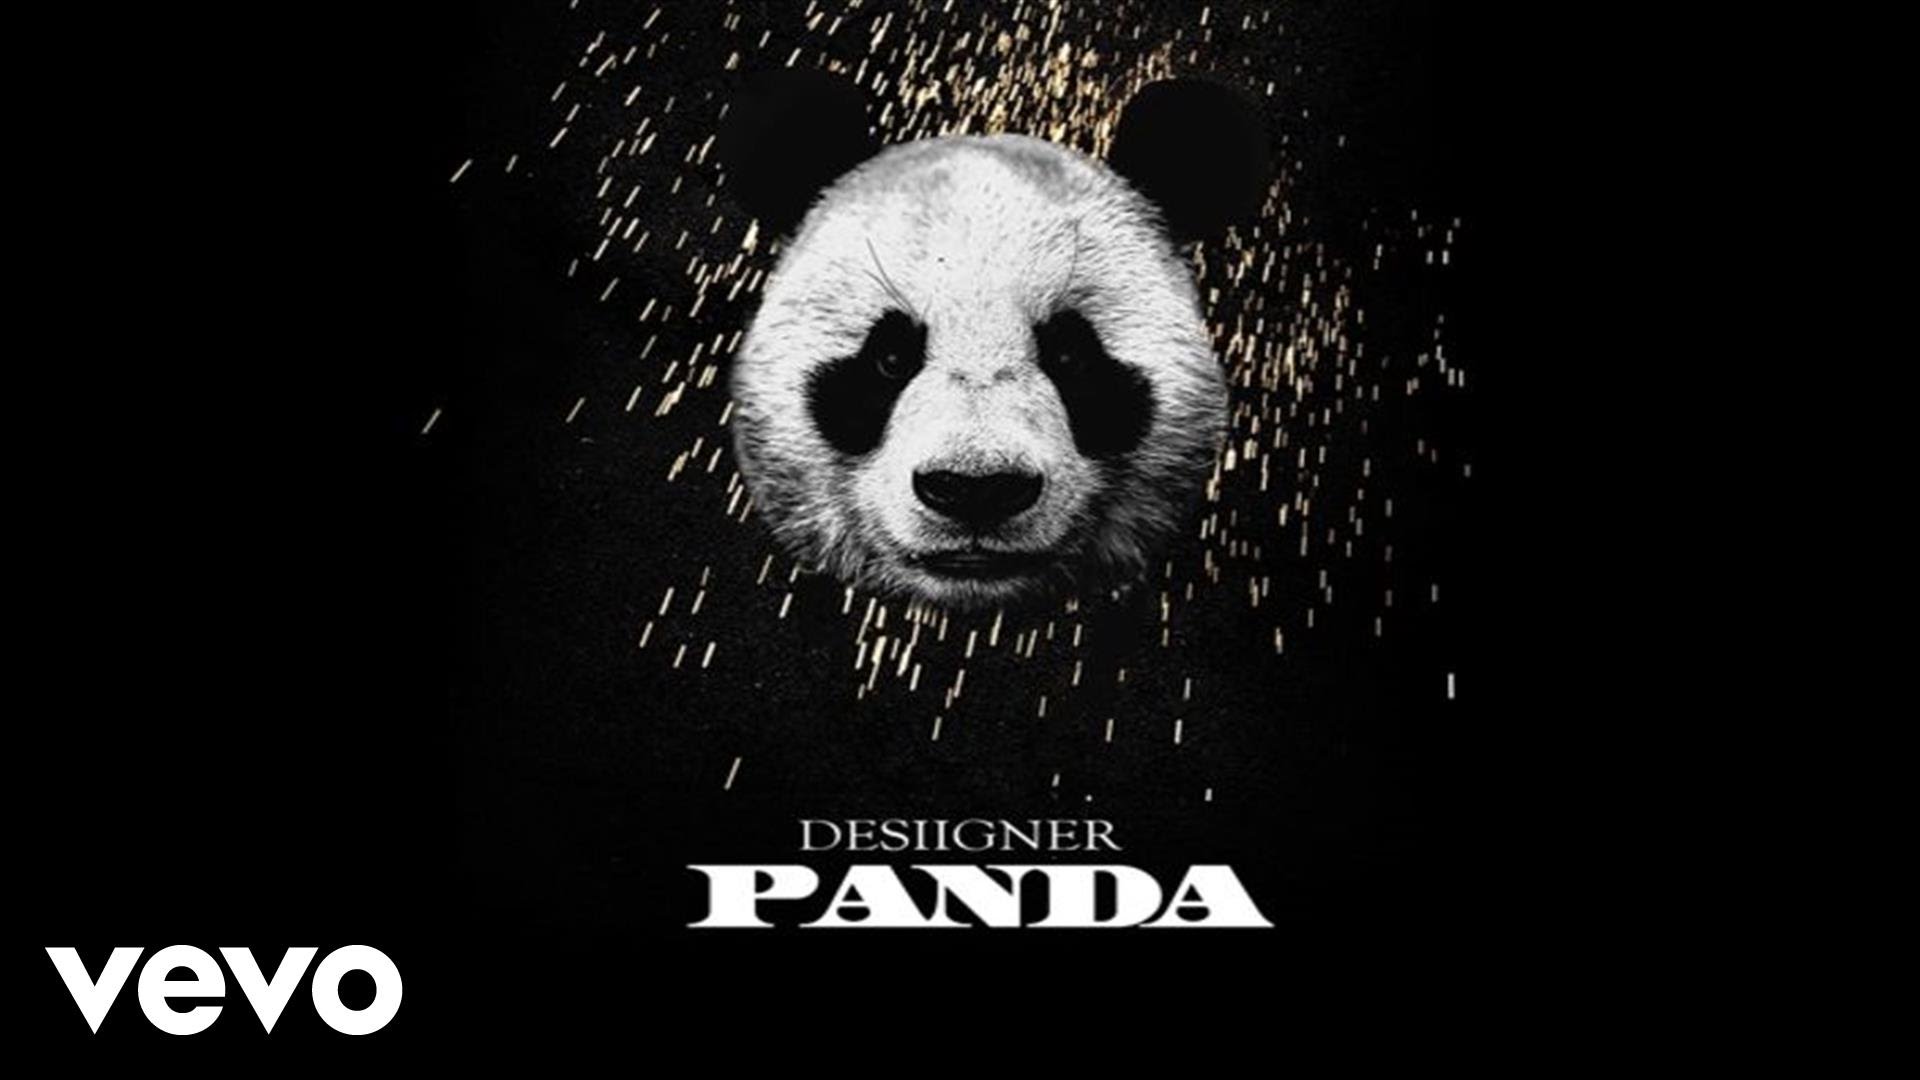 Desiigner - Panda (Audio) - YouTube